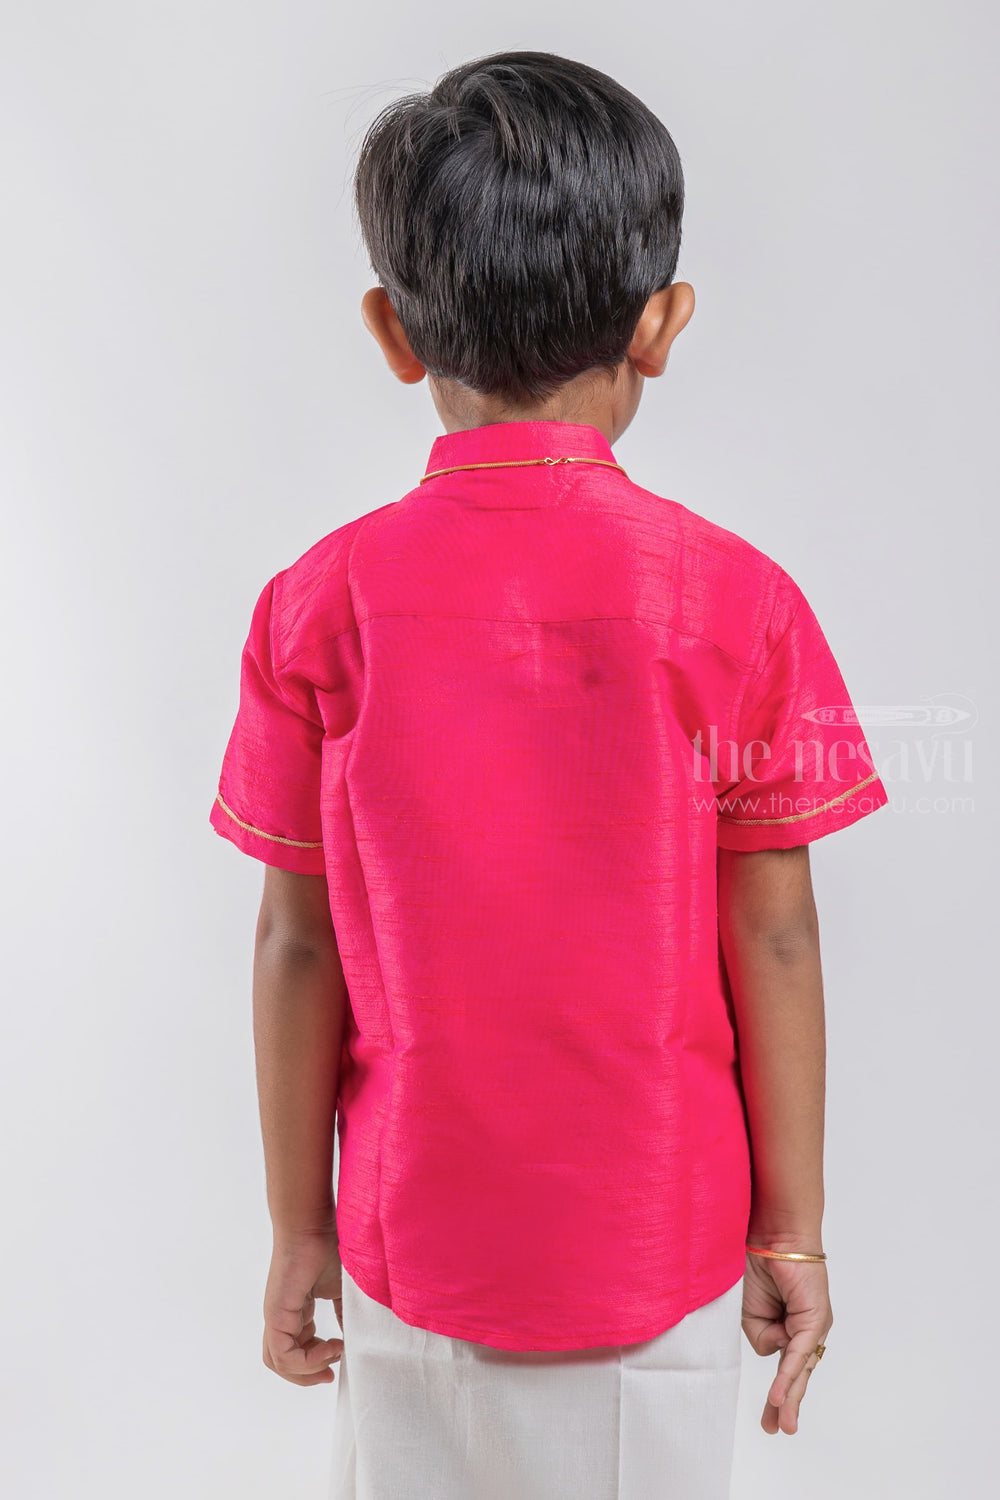 The Nesavu Boys Silk Shirt Regal Ruby Little Maharaja Boys Shirt With Unicorn Embroidery psr silks Nesavu